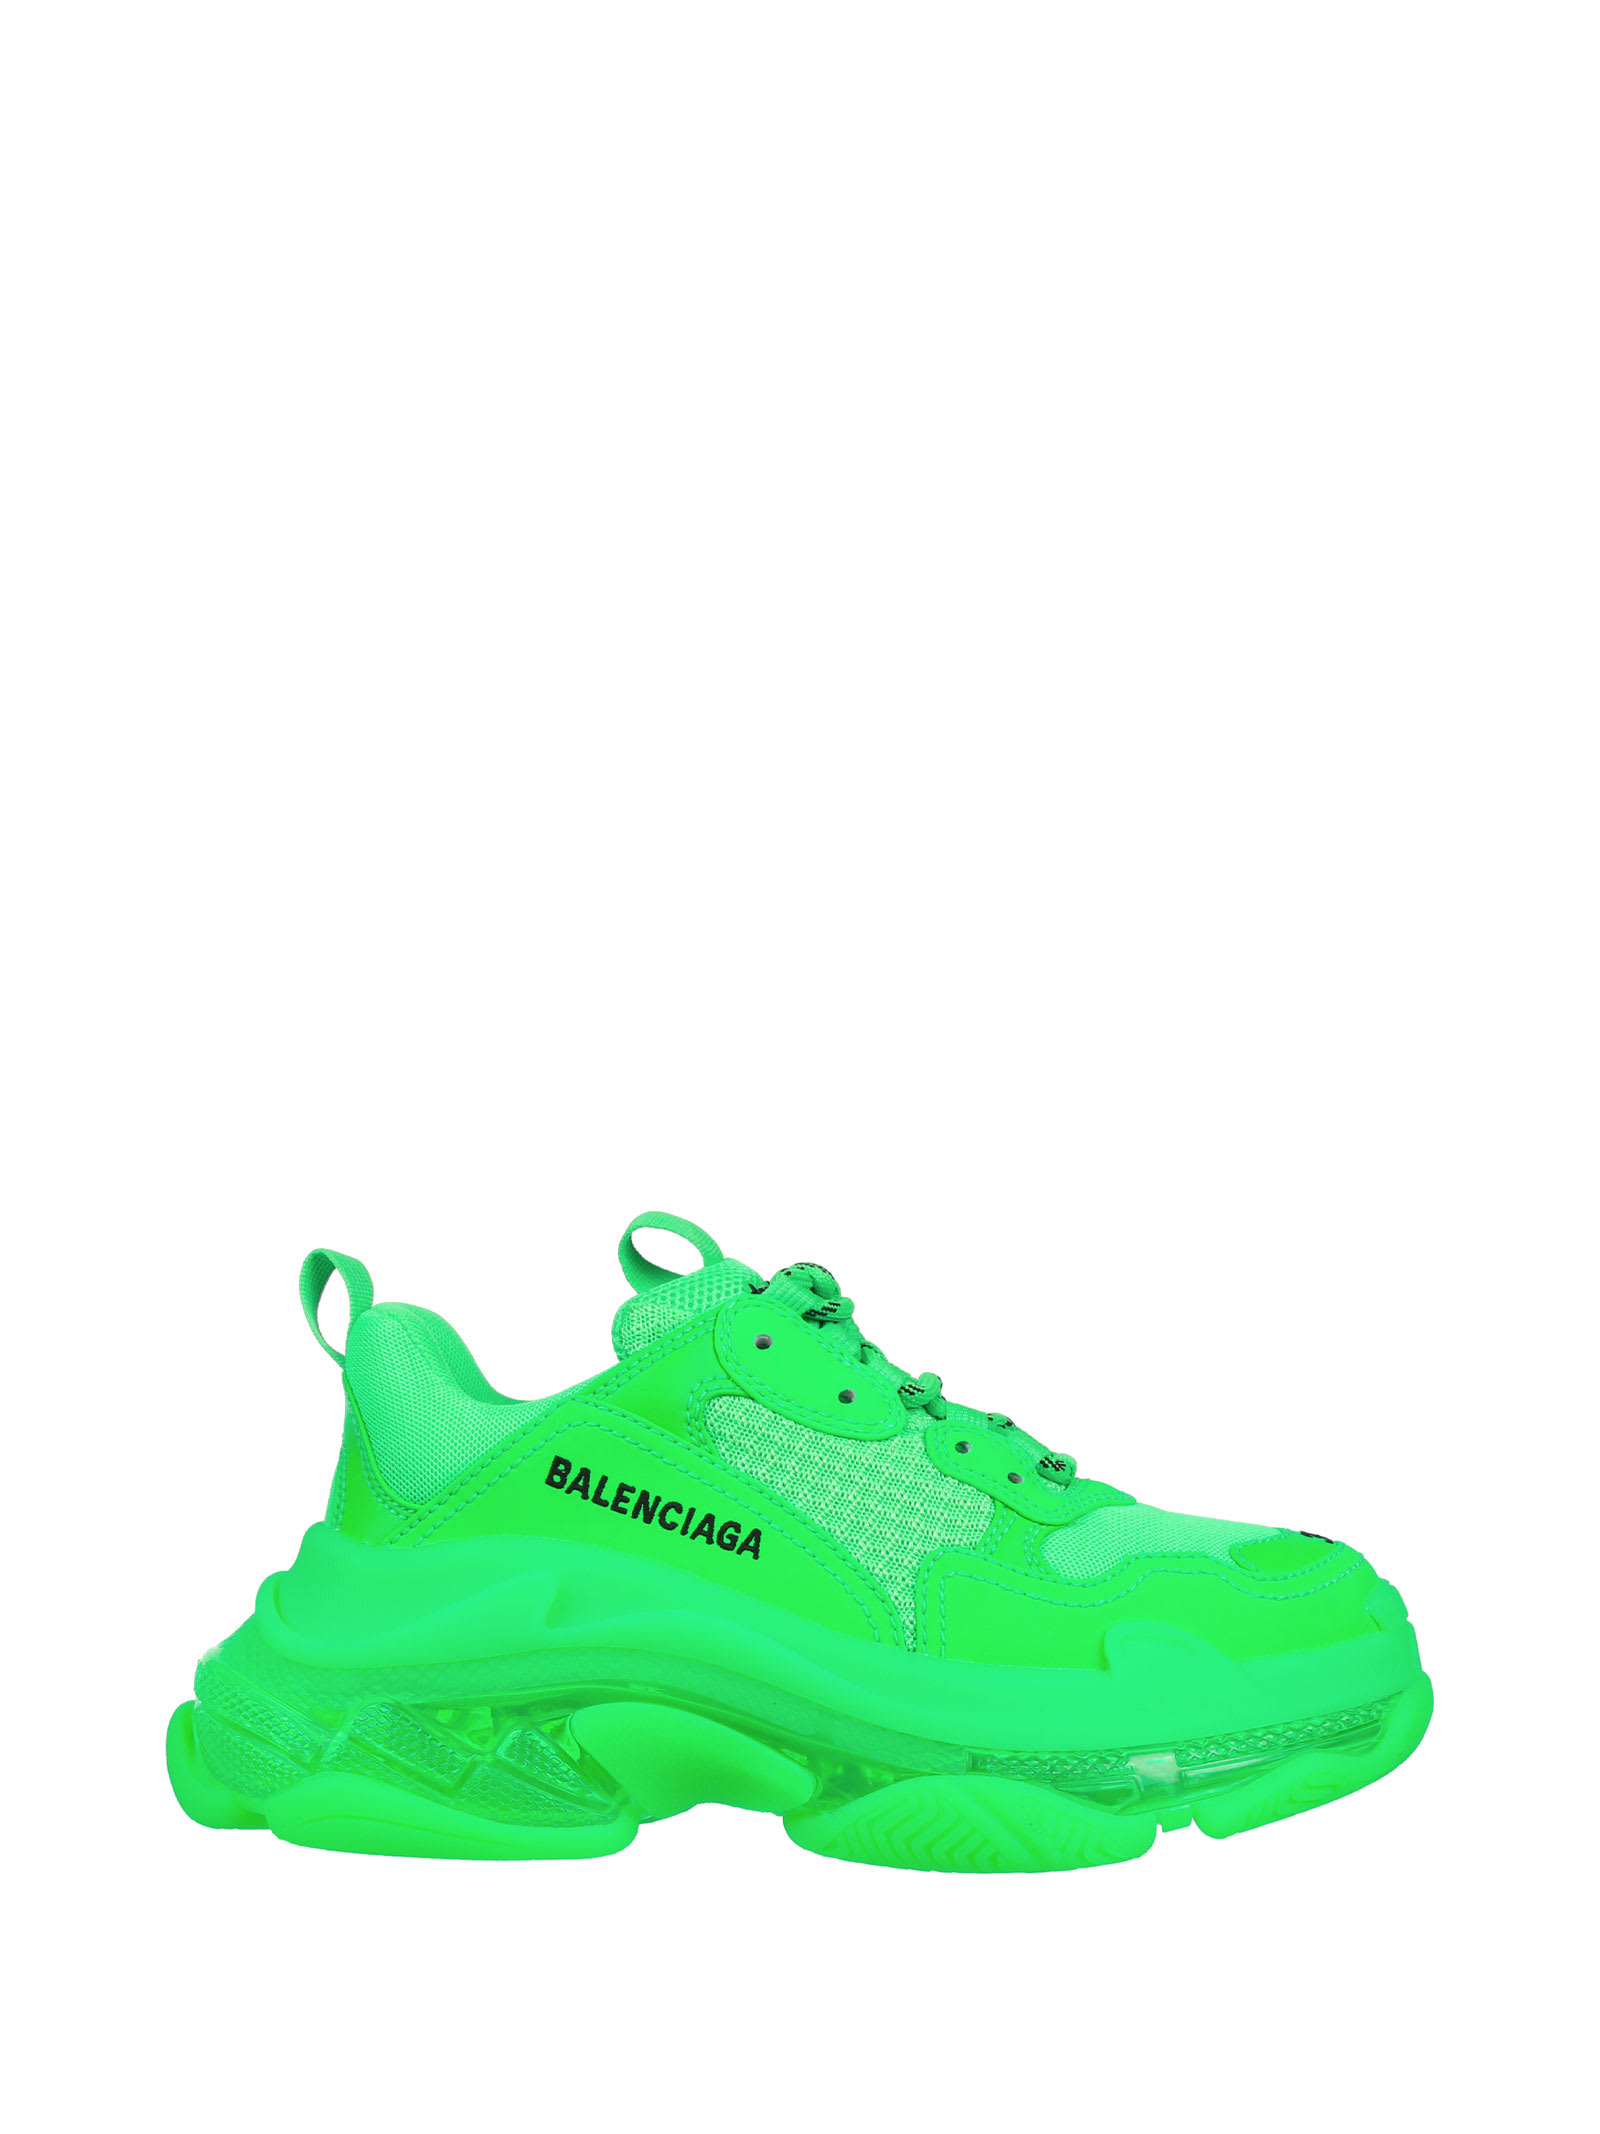 Buy Balenciaga Side Logo Platform Sneakers price in US Online  Shoe  Trove